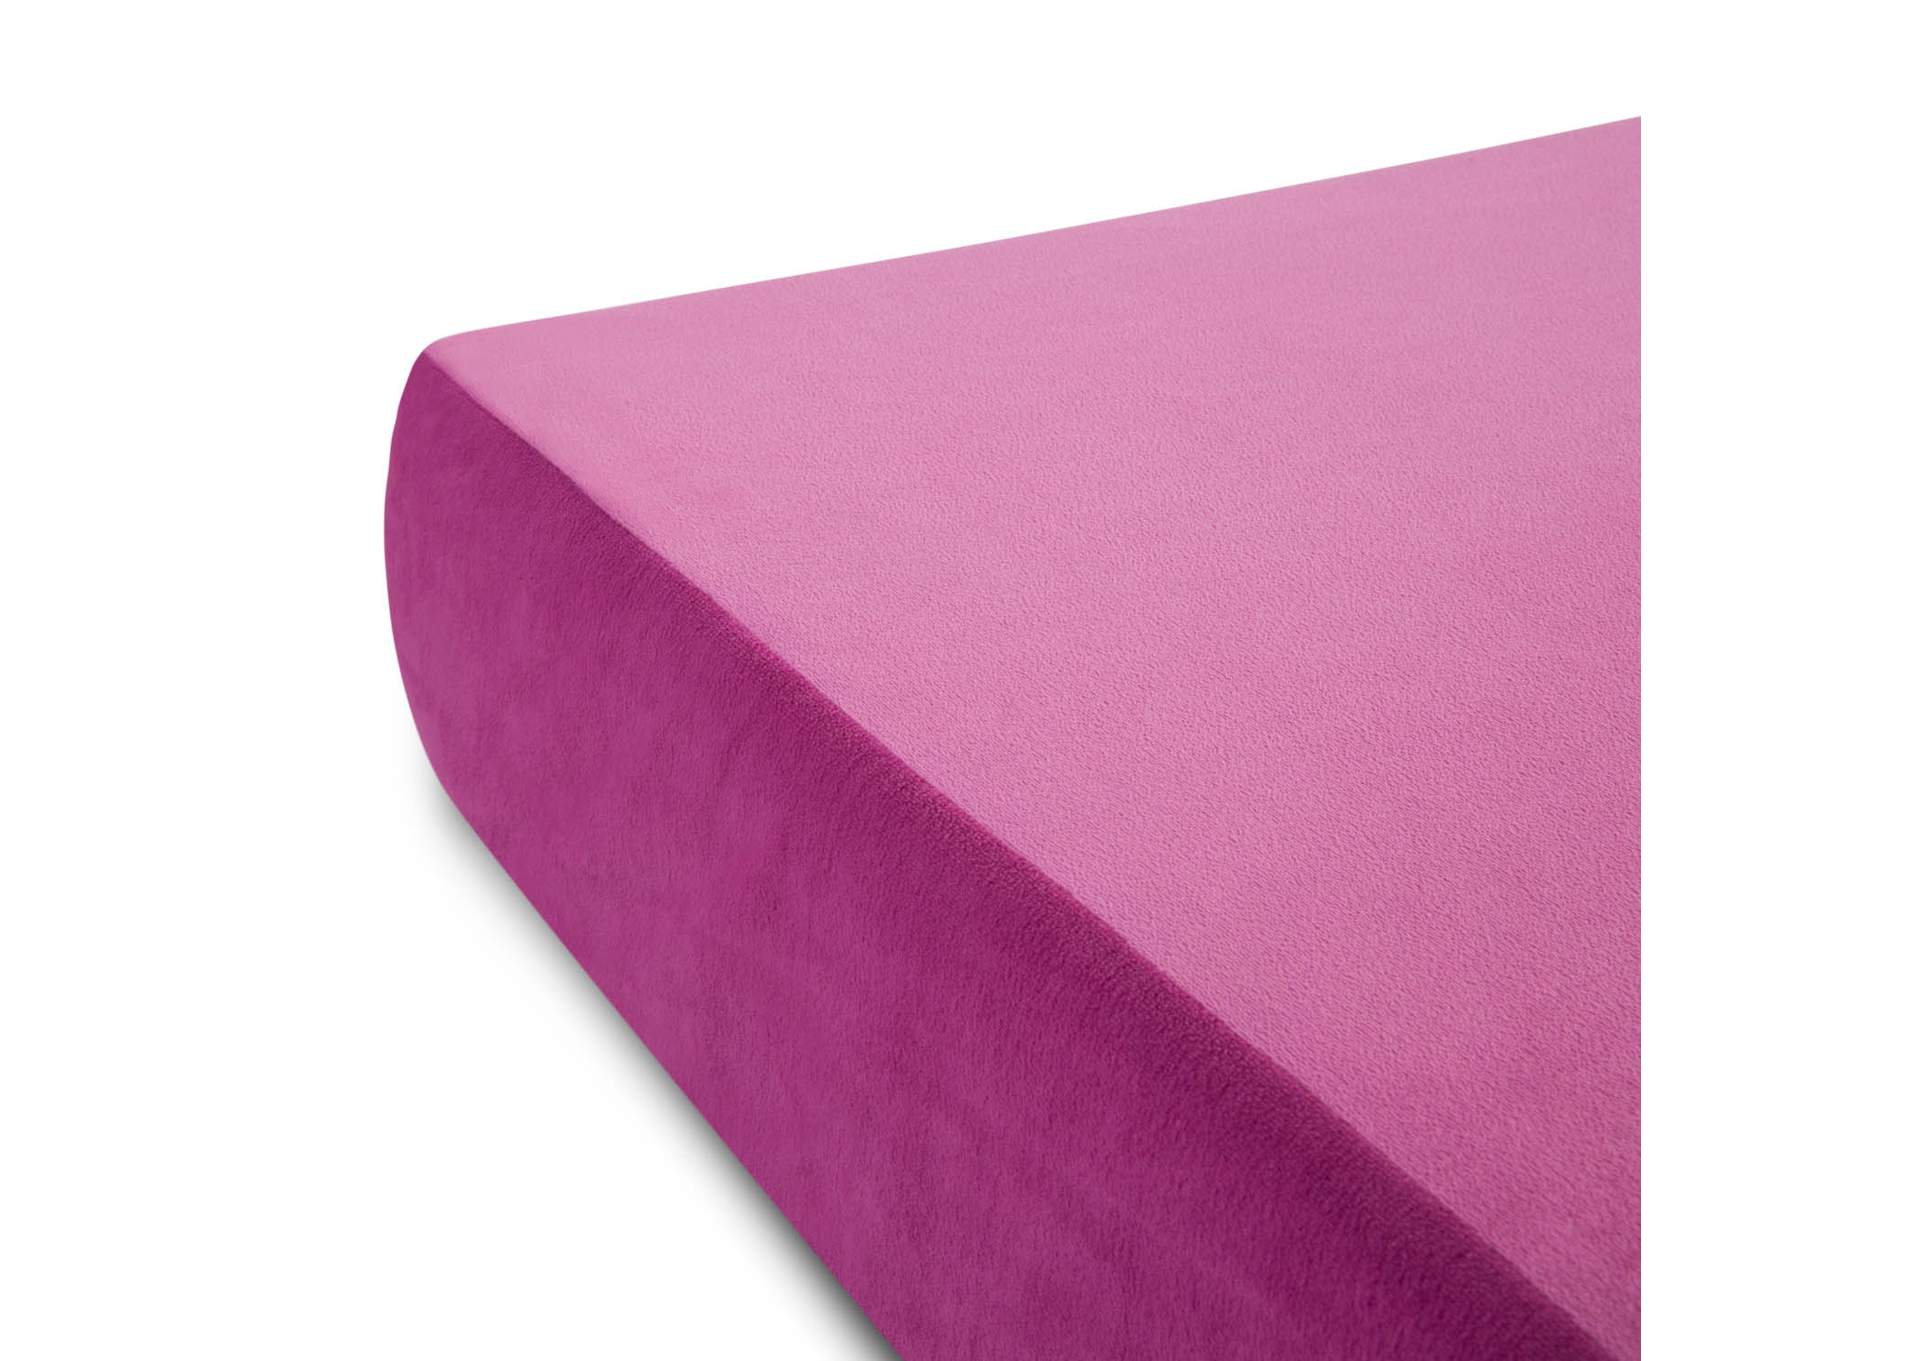 Weekender Pink Brighton Bed Gel Memory Foam Twin Mattress,Malouf